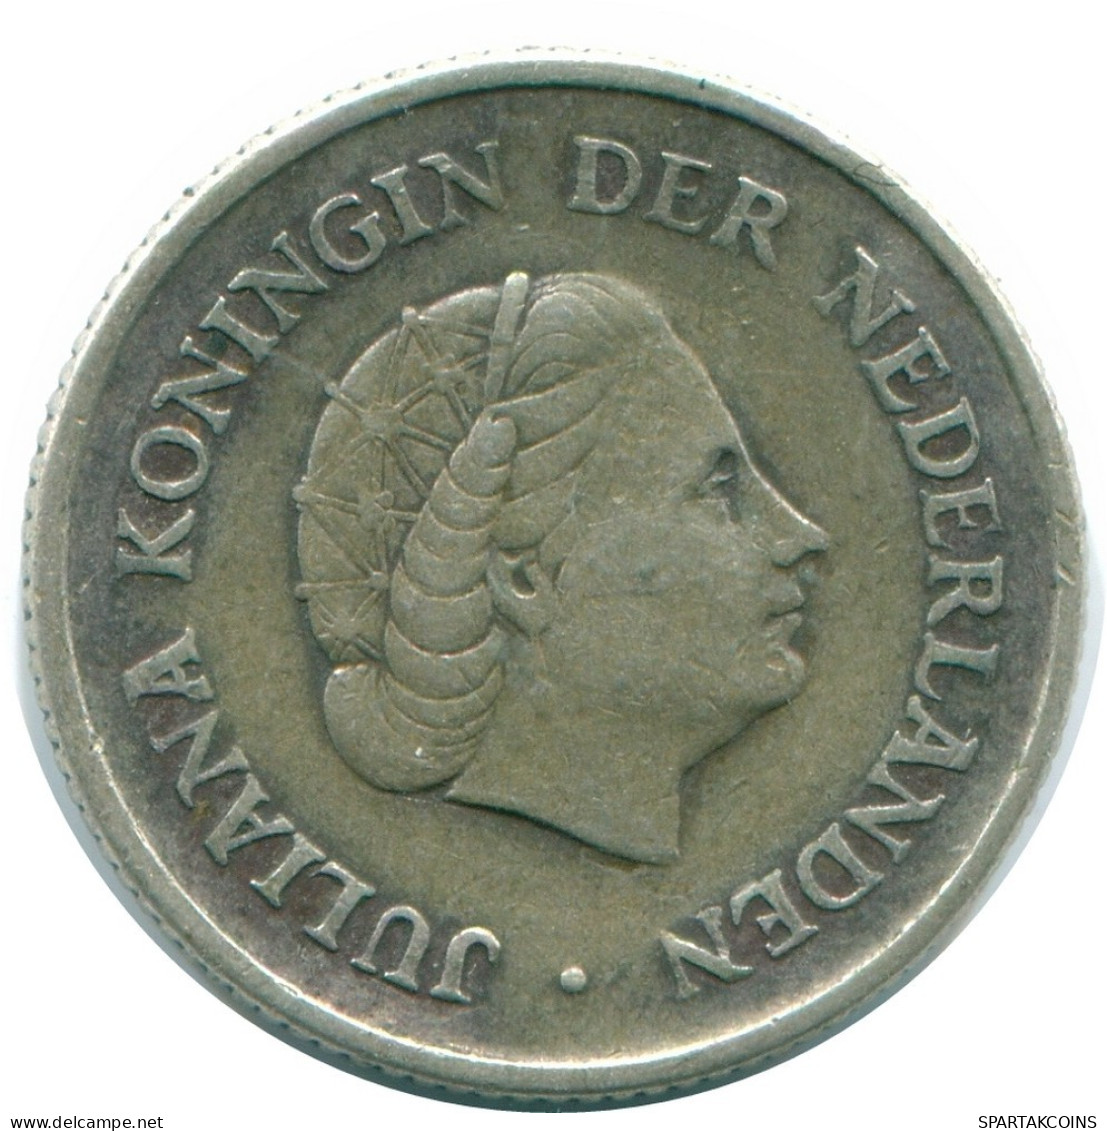 1/4 GULDEN 1965 NETHERLANDS ANTILLES SILVER Colonial Coin #NL11405.4.U.A - Antillas Neerlandesas